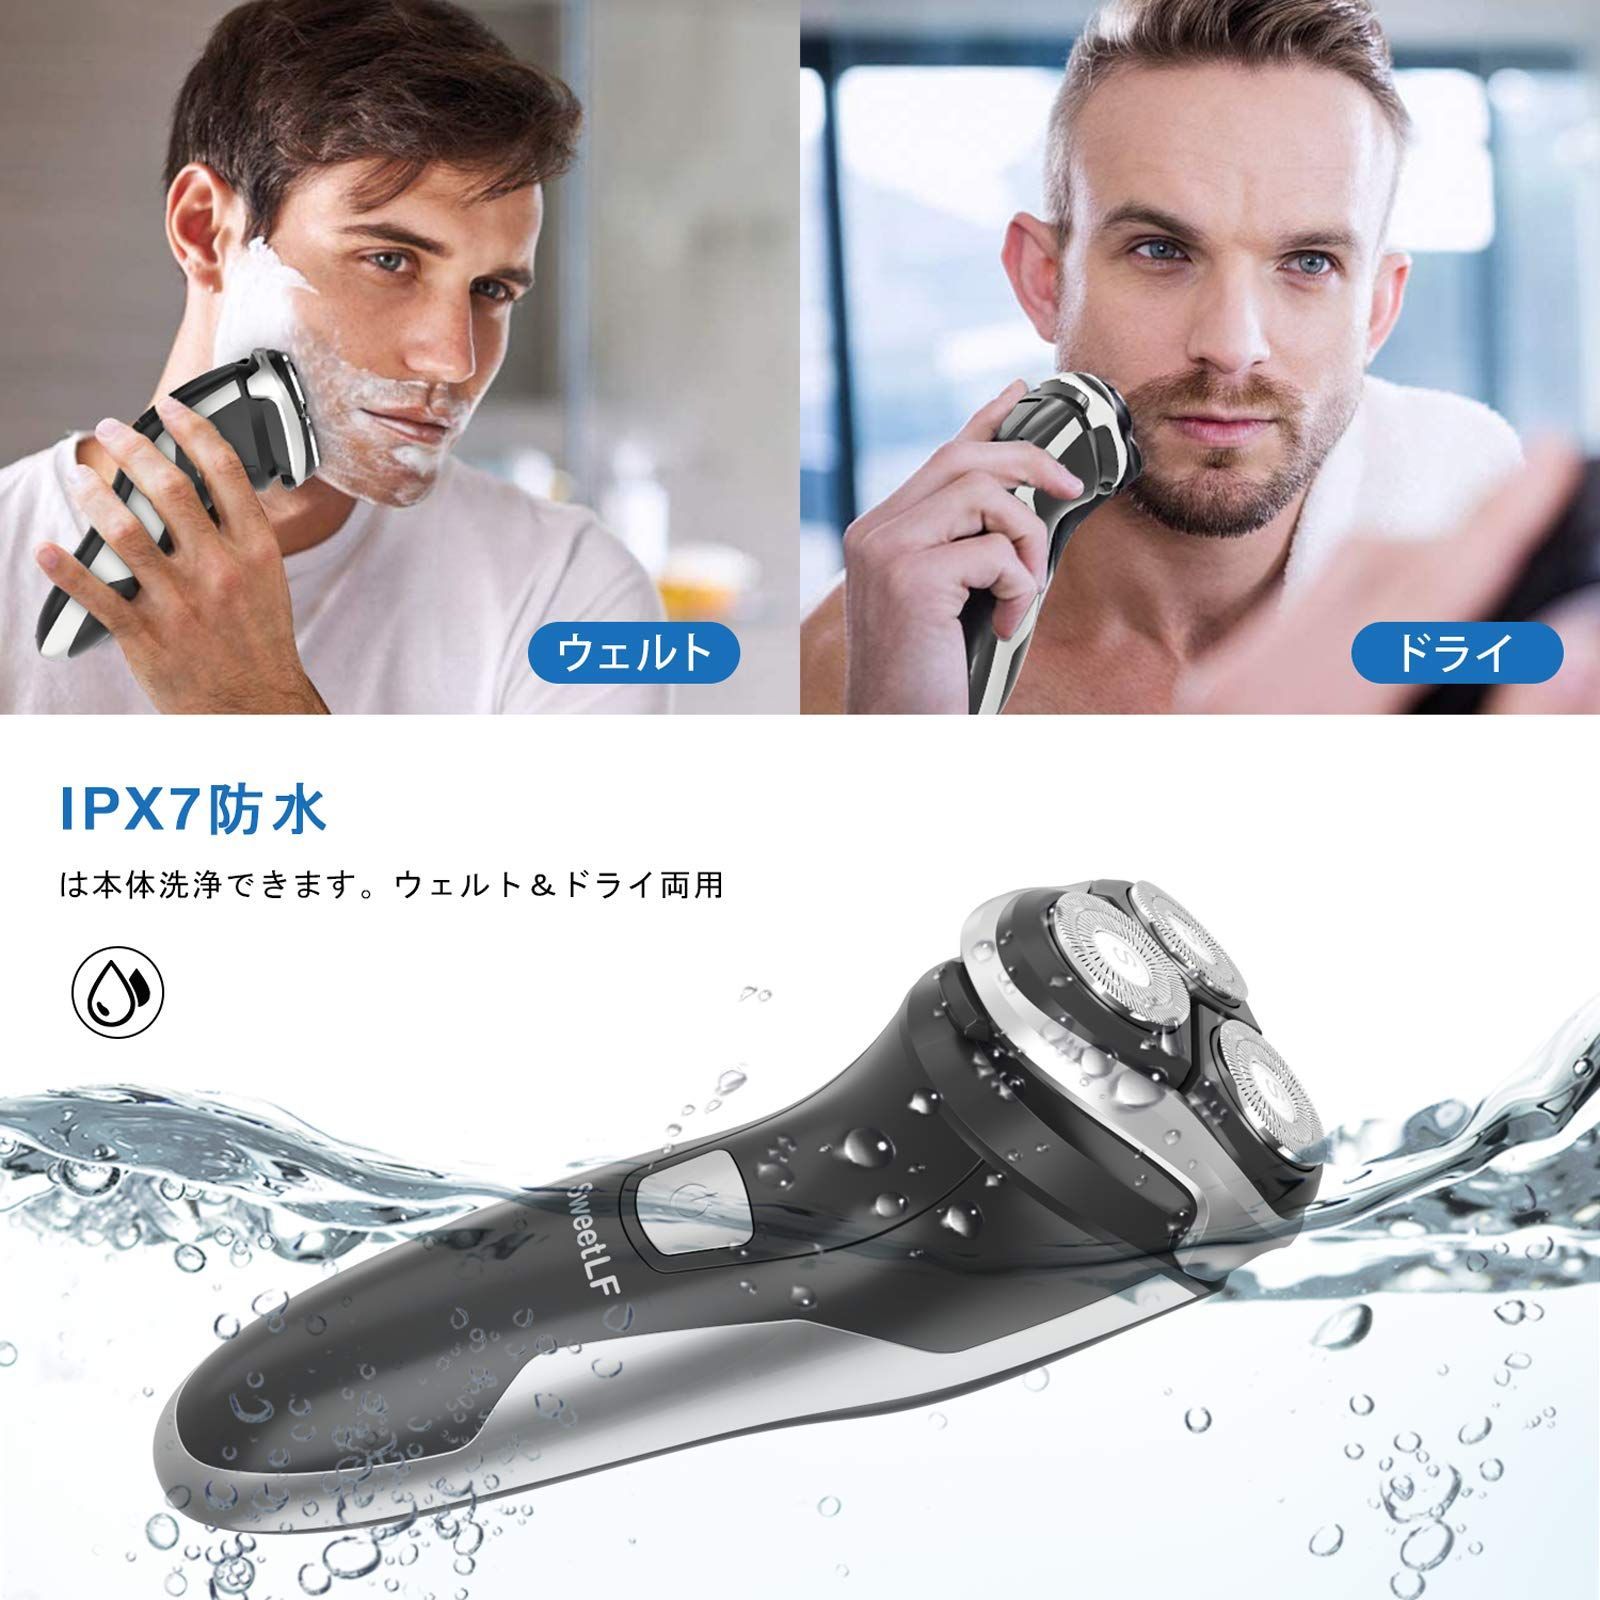 SweetLF 電気シェーバー メンズ ひげそり 回転式 3枚刃 USB充電式 IPX7防水 お風呂剃り可 トリマー付 LED電池残量表示 (Blue)